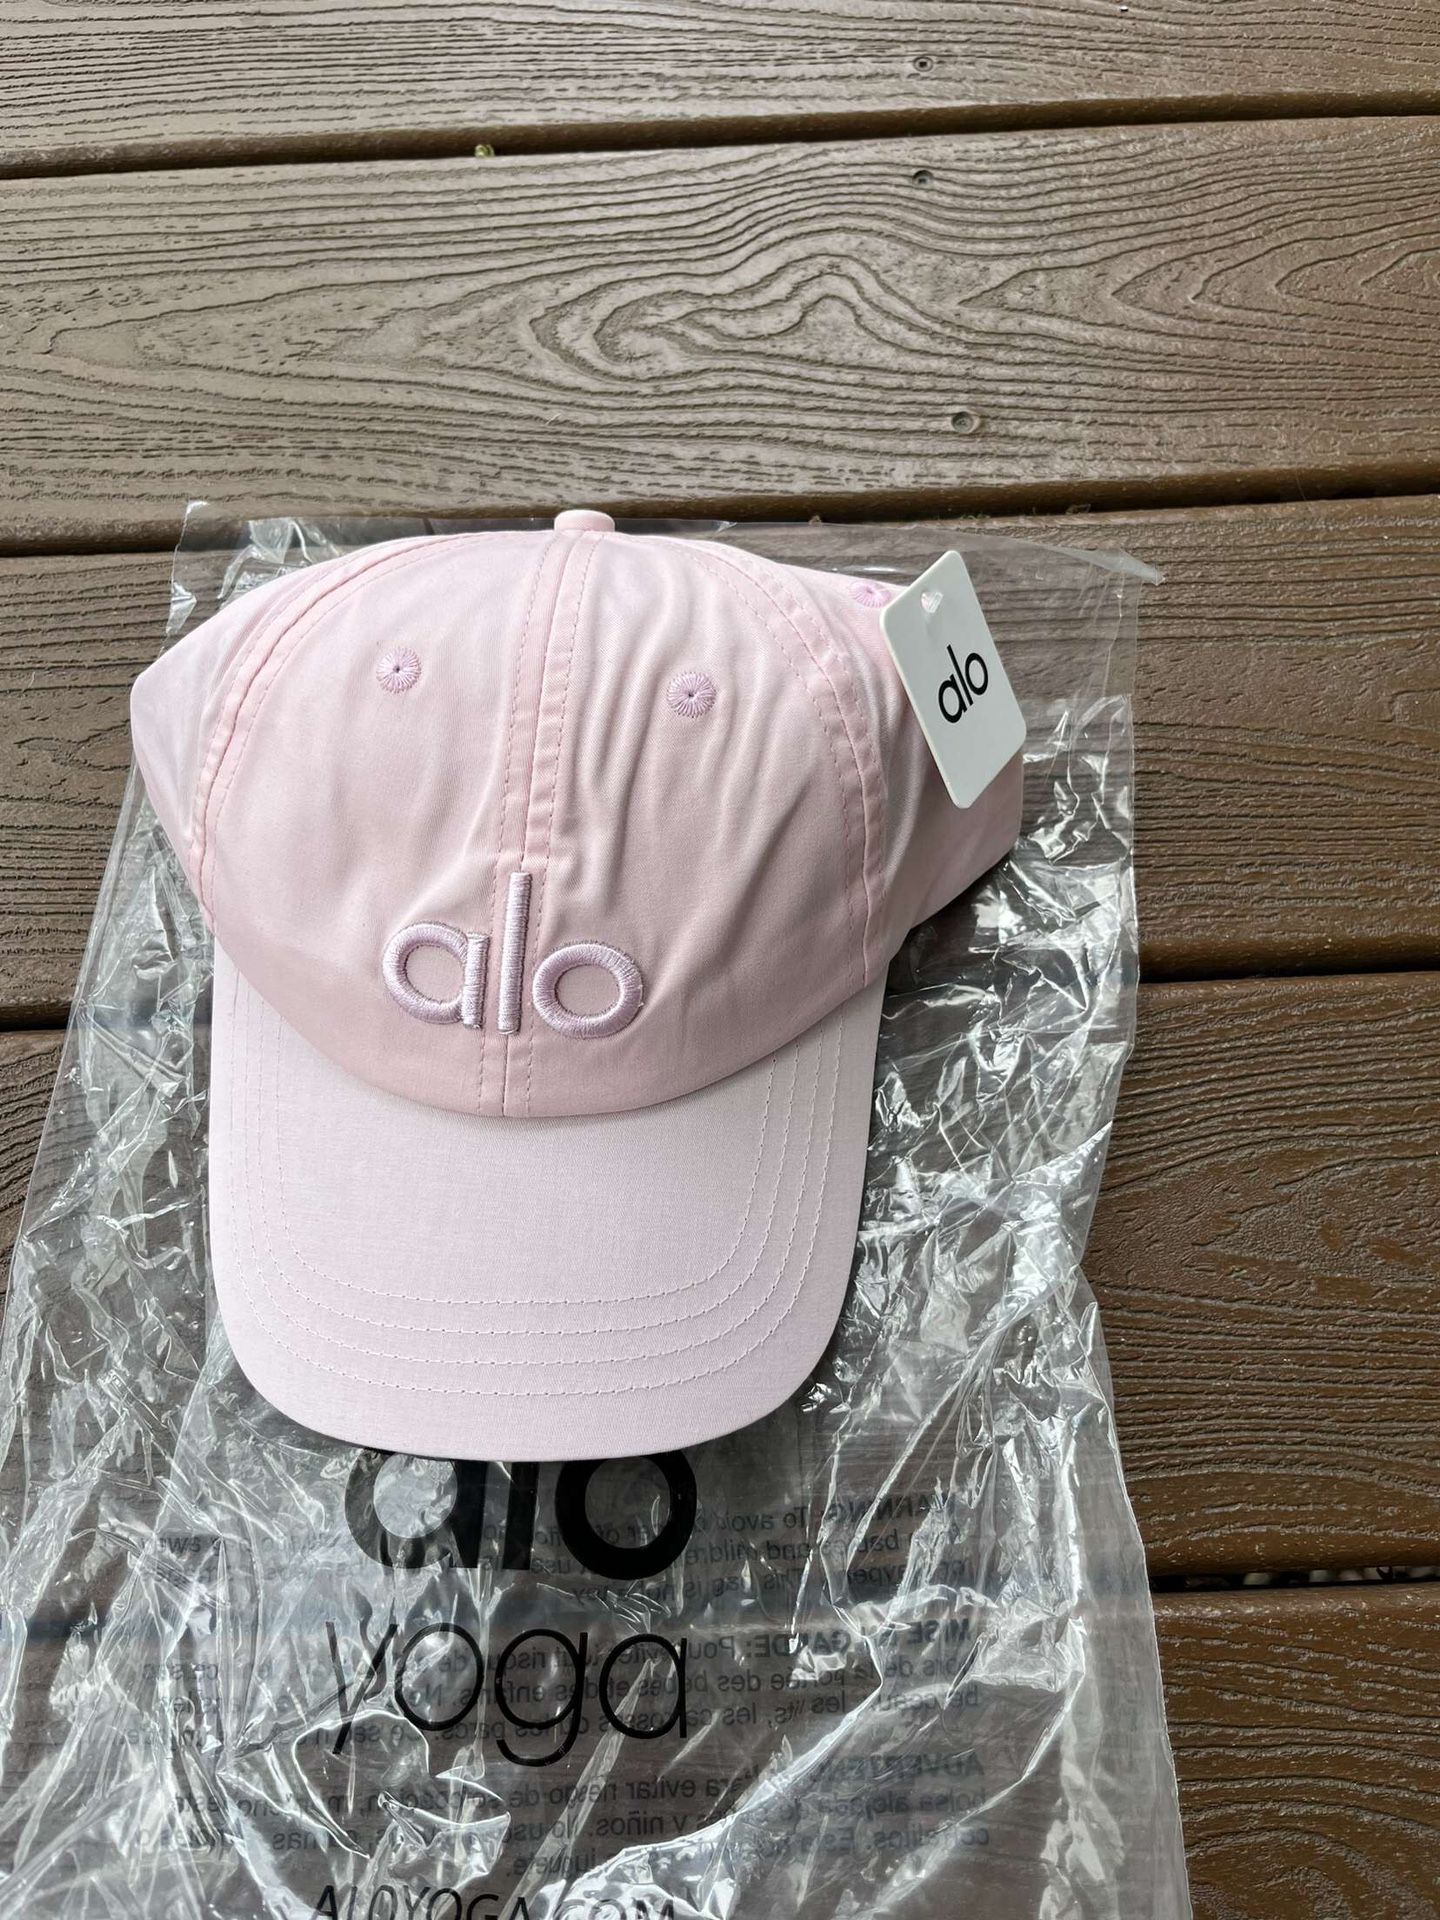 Pink Alo Yoga Women’s Hat Cap BRAND NEW